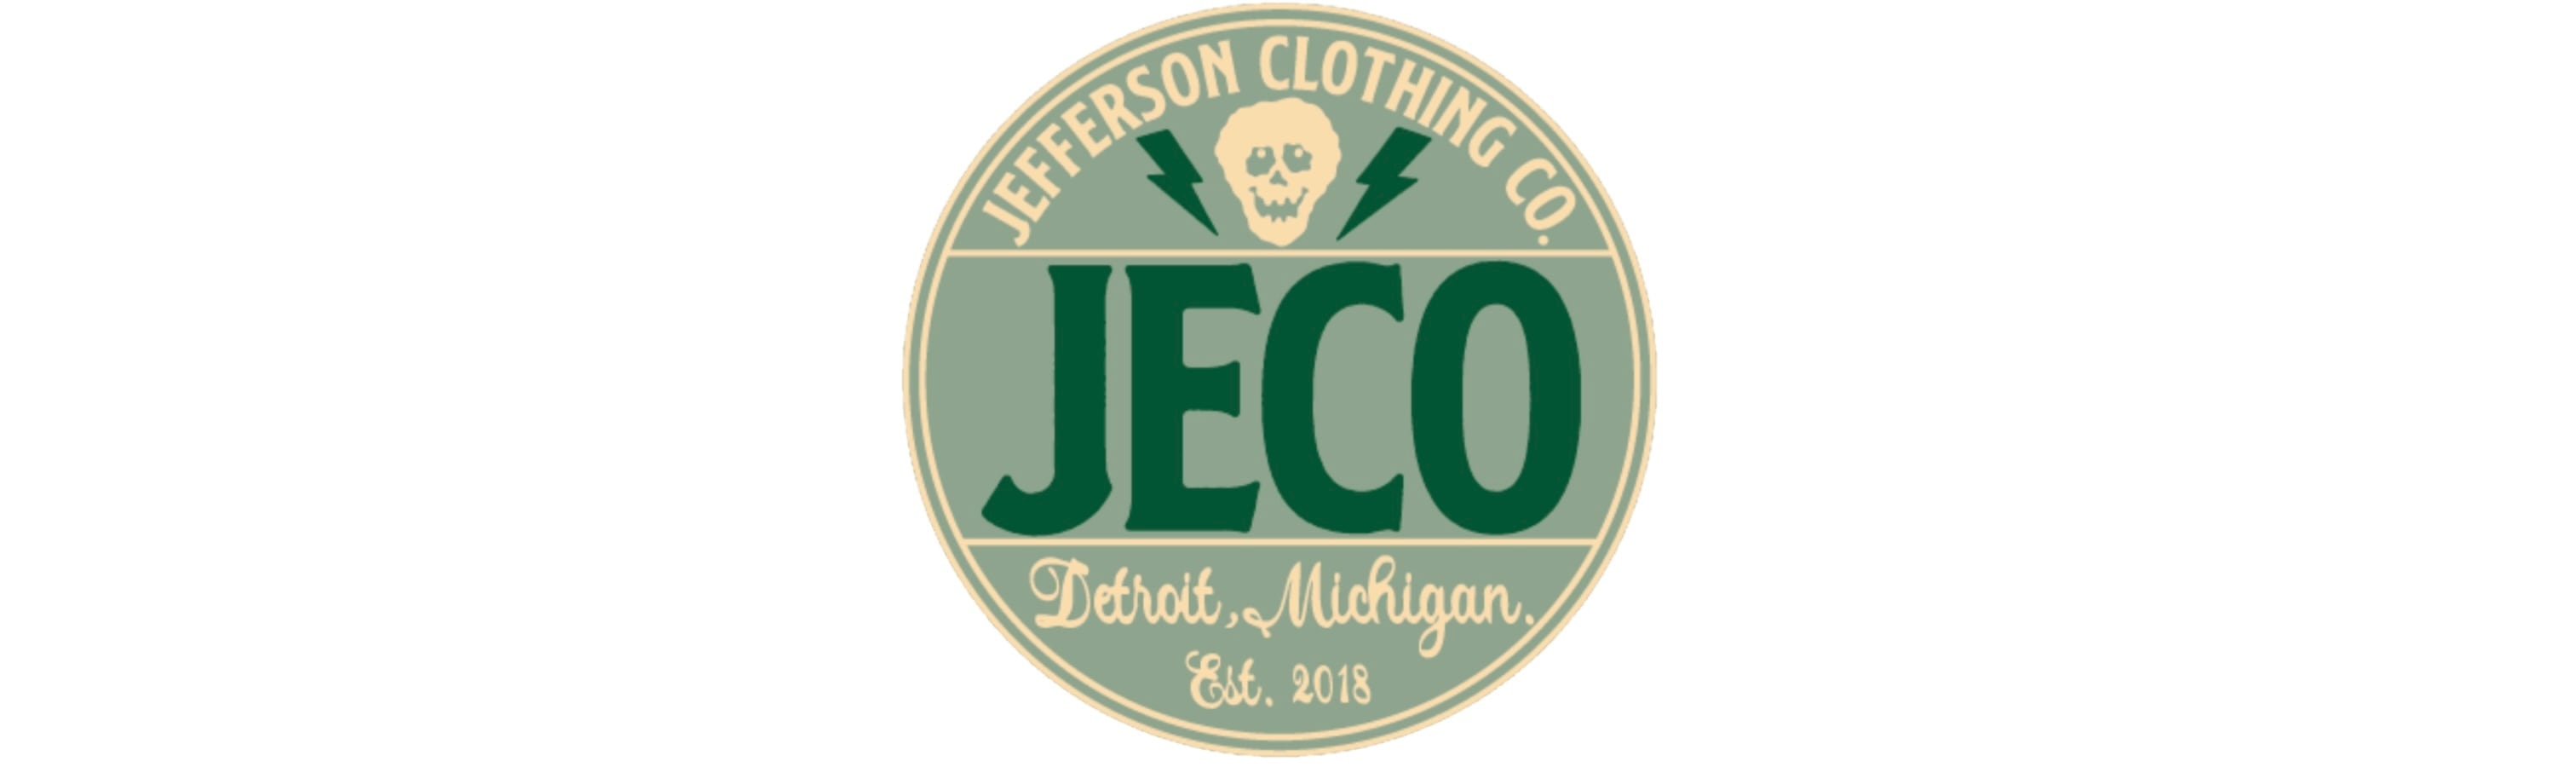 Jefferson clothing co.